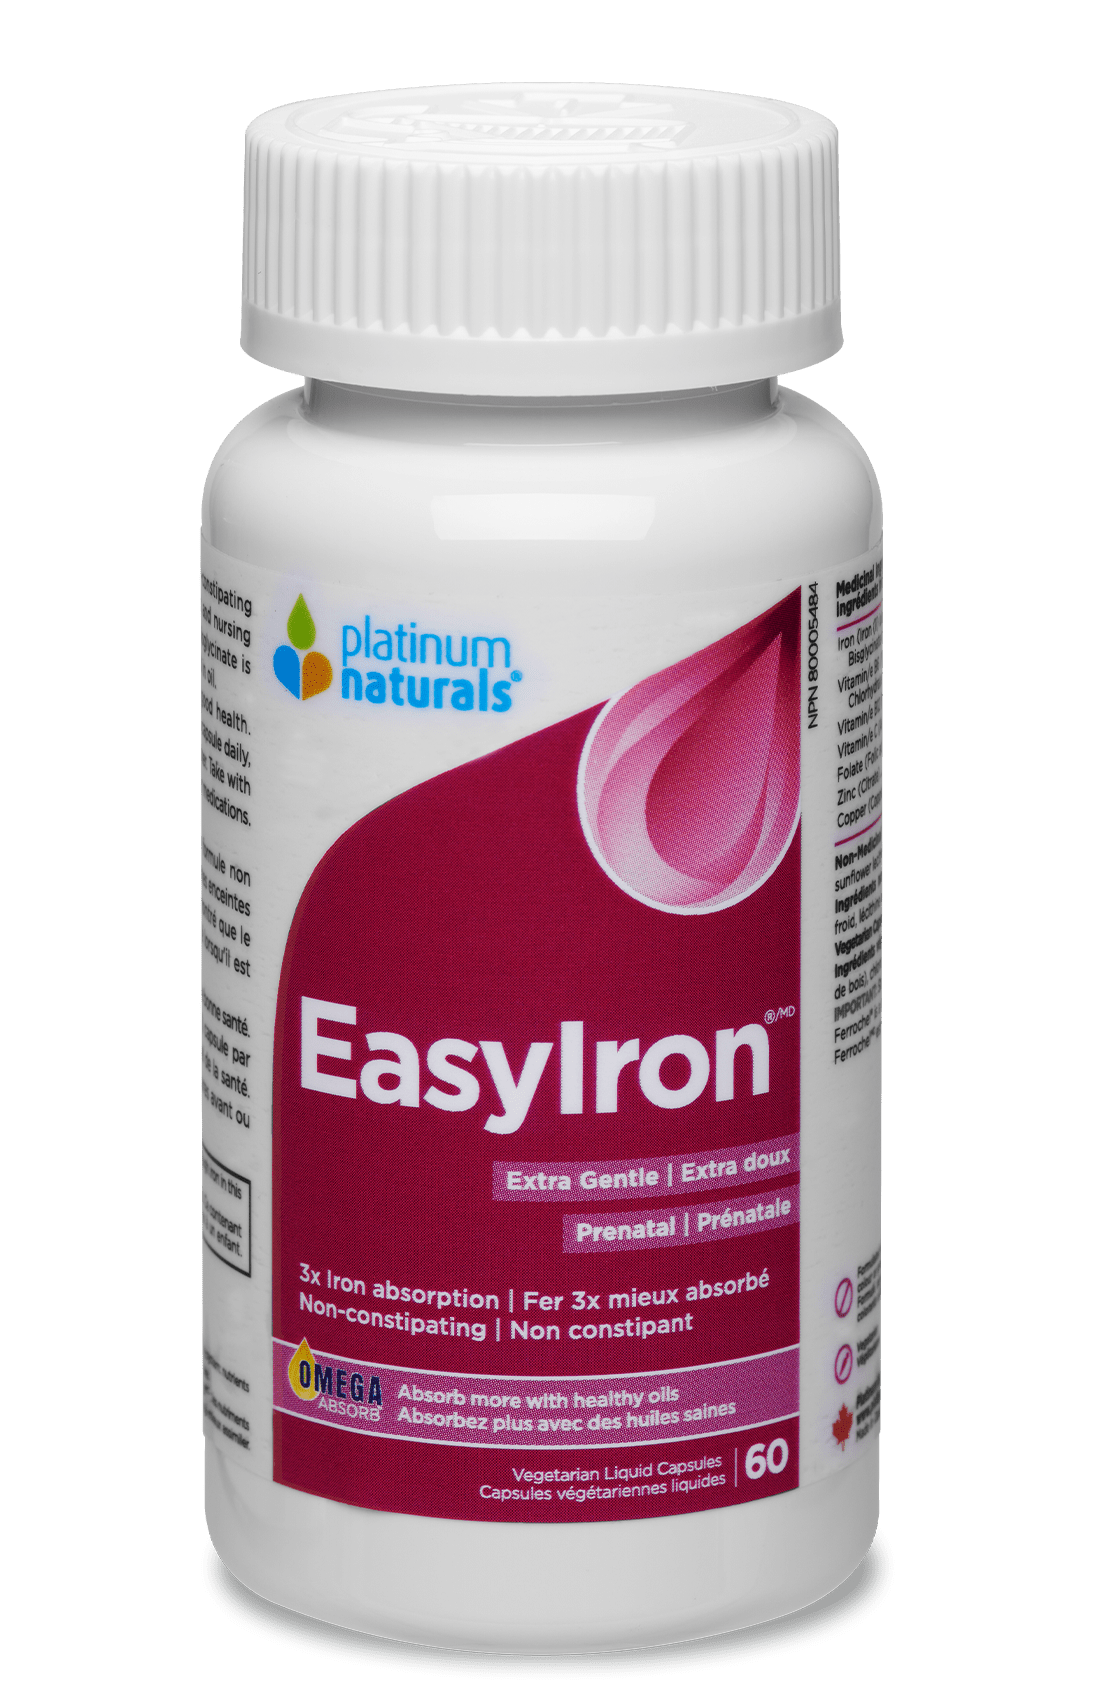 Prenatal EasyIron Extra Gentle Prenatal cg-dev-platinumnaturals 60 